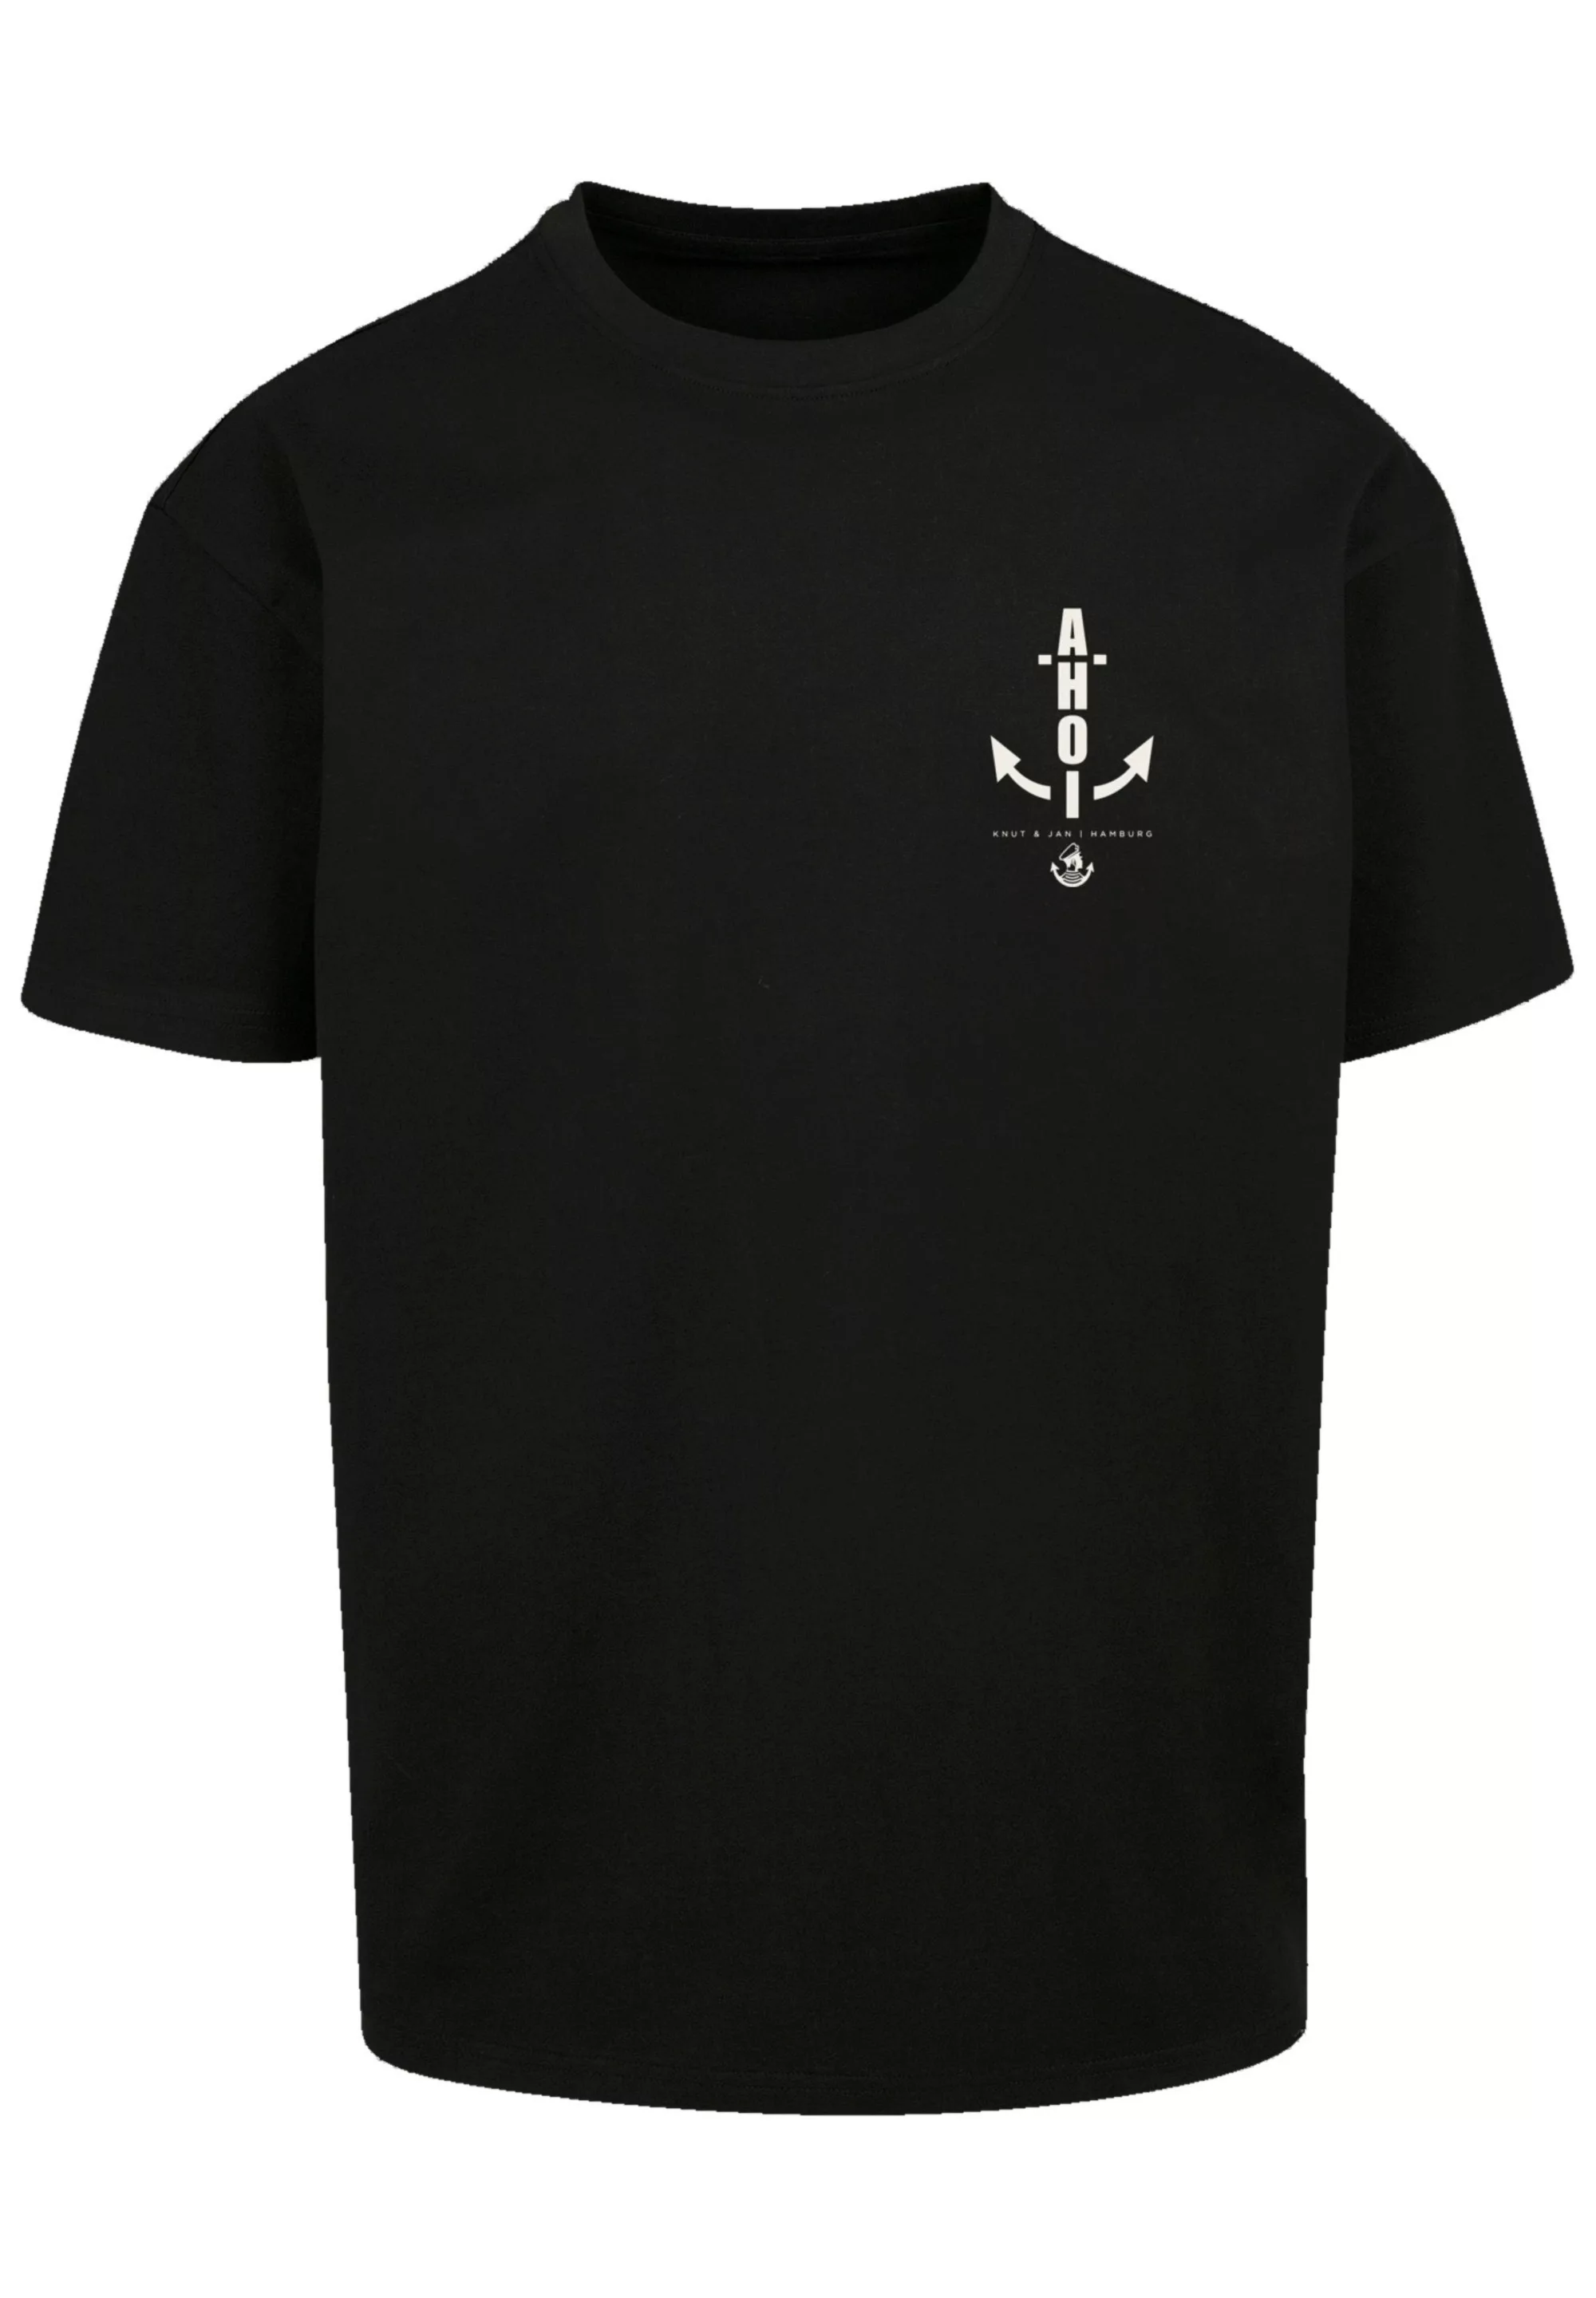 F4NT4STIC T-Shirt "Ahoi Anker Knut & Jan Hamburg" günstig online kaufen